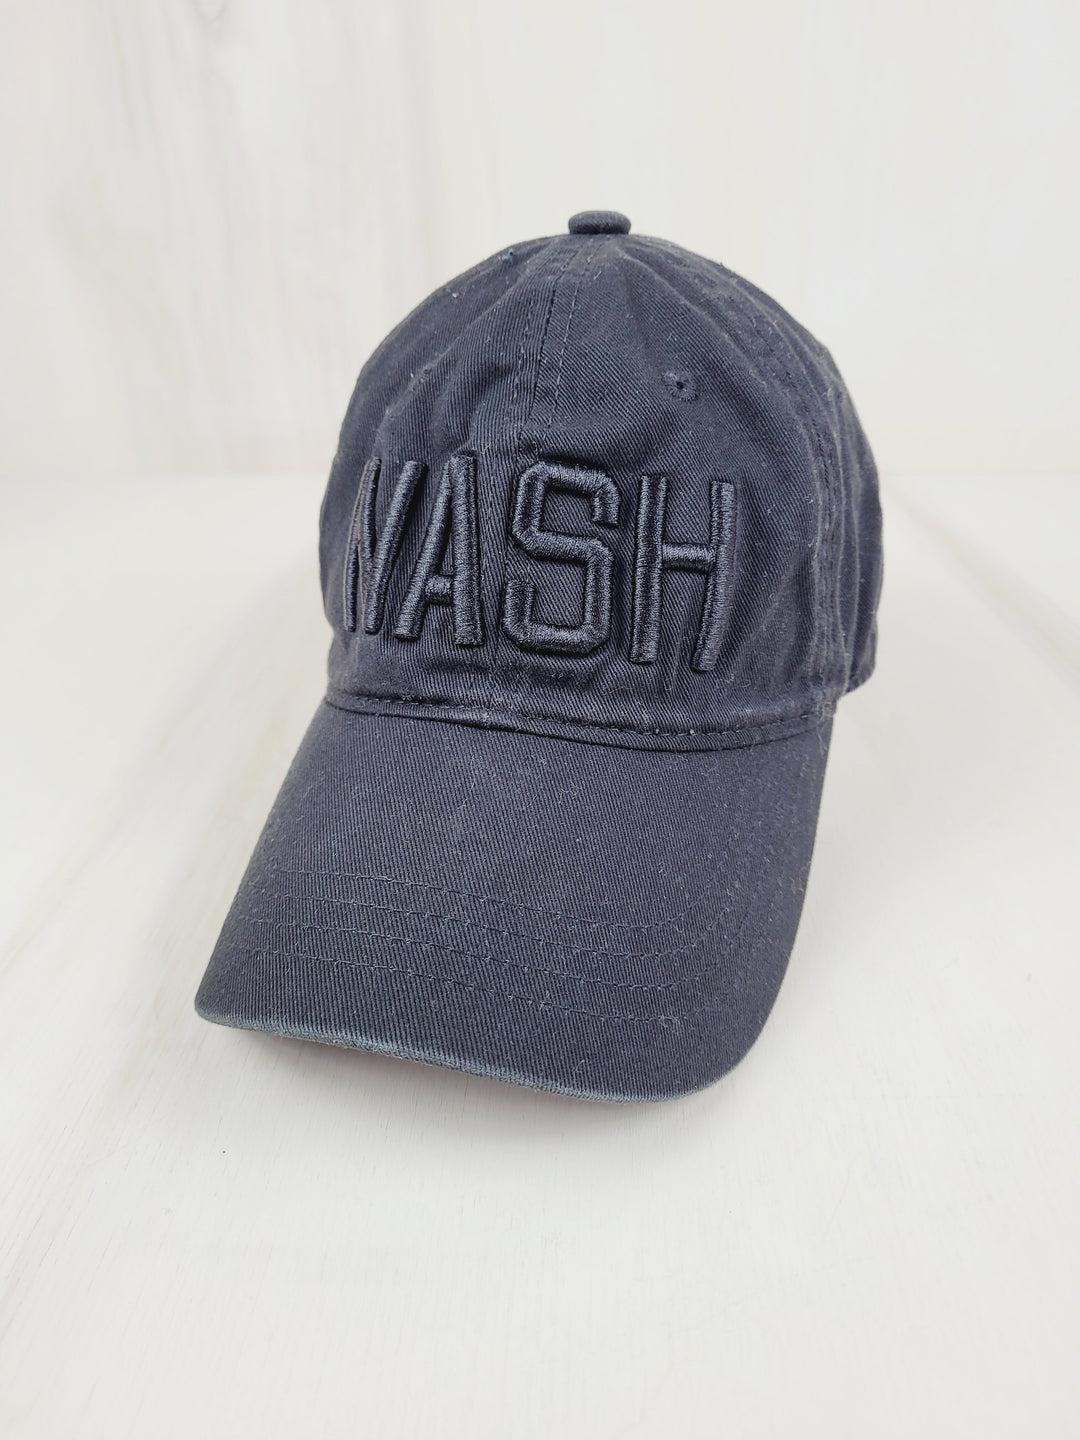 NASH BLACK EMBROIDERED CAP OSFM EUC